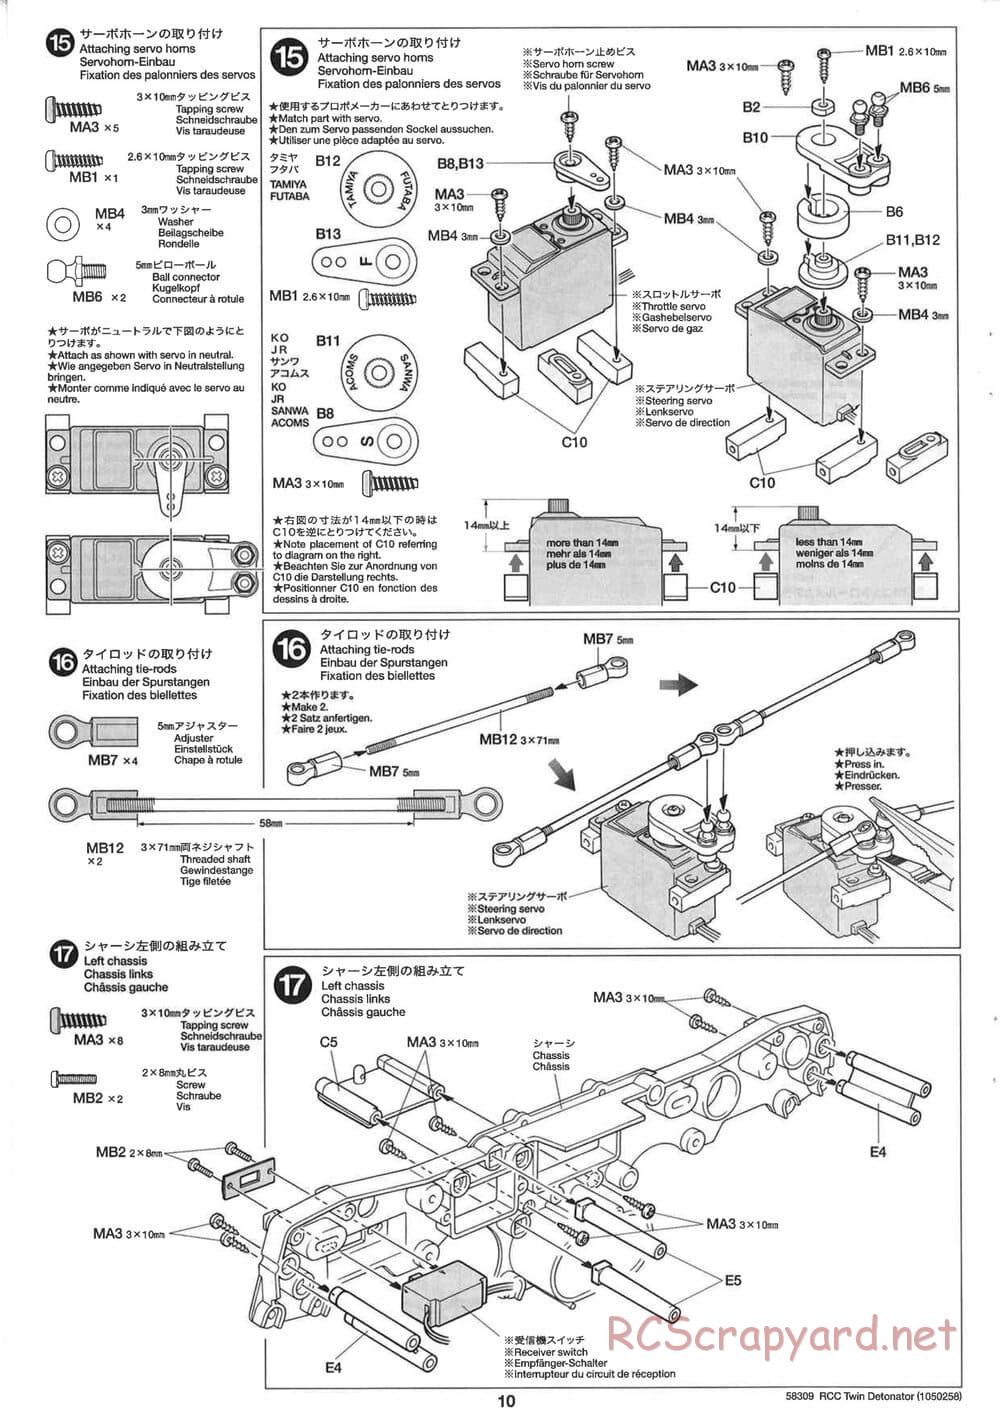 Tamiya - Twin Detonator - WR-01 Chassis - Manual - Page 10